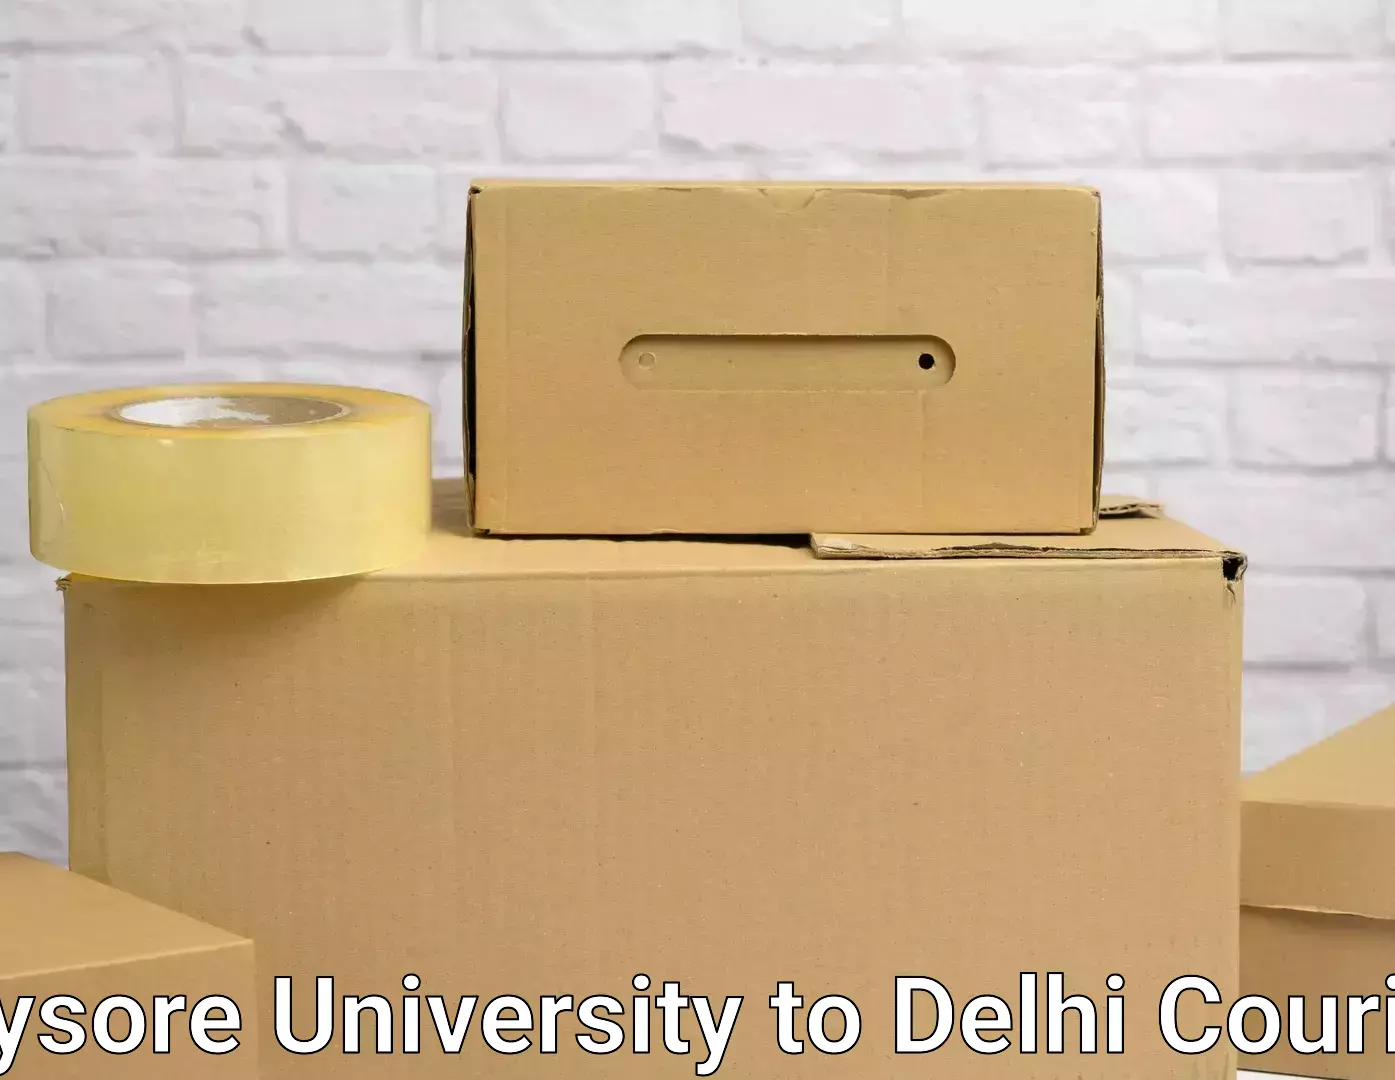 Furniture transport professionals Mysore University to University of Delhi